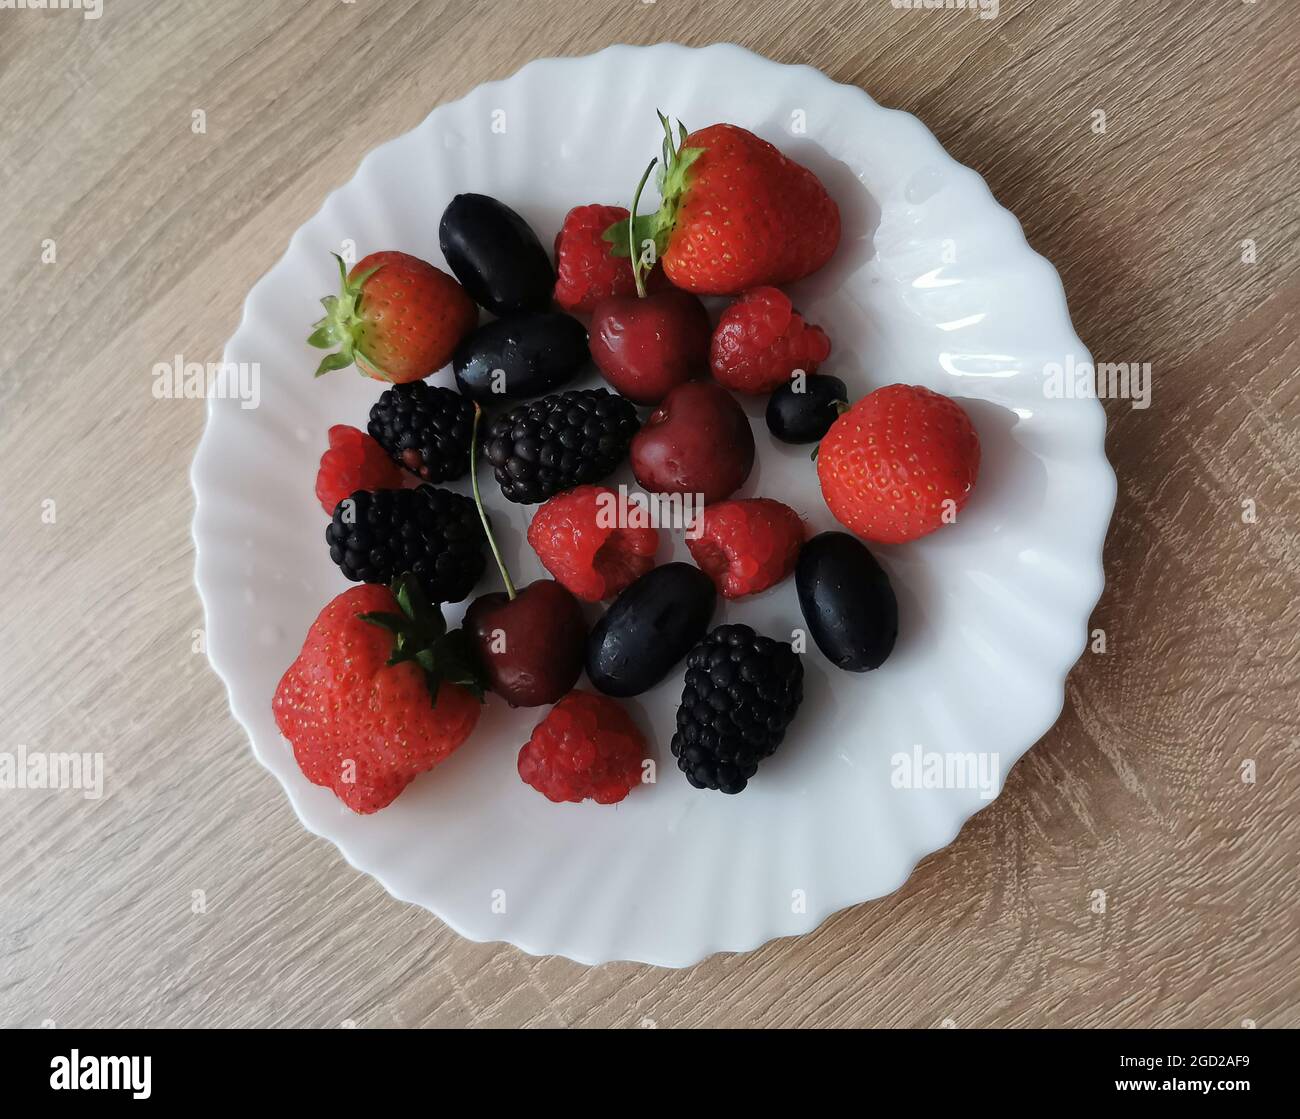 Summer berries for brain health Stock Photo